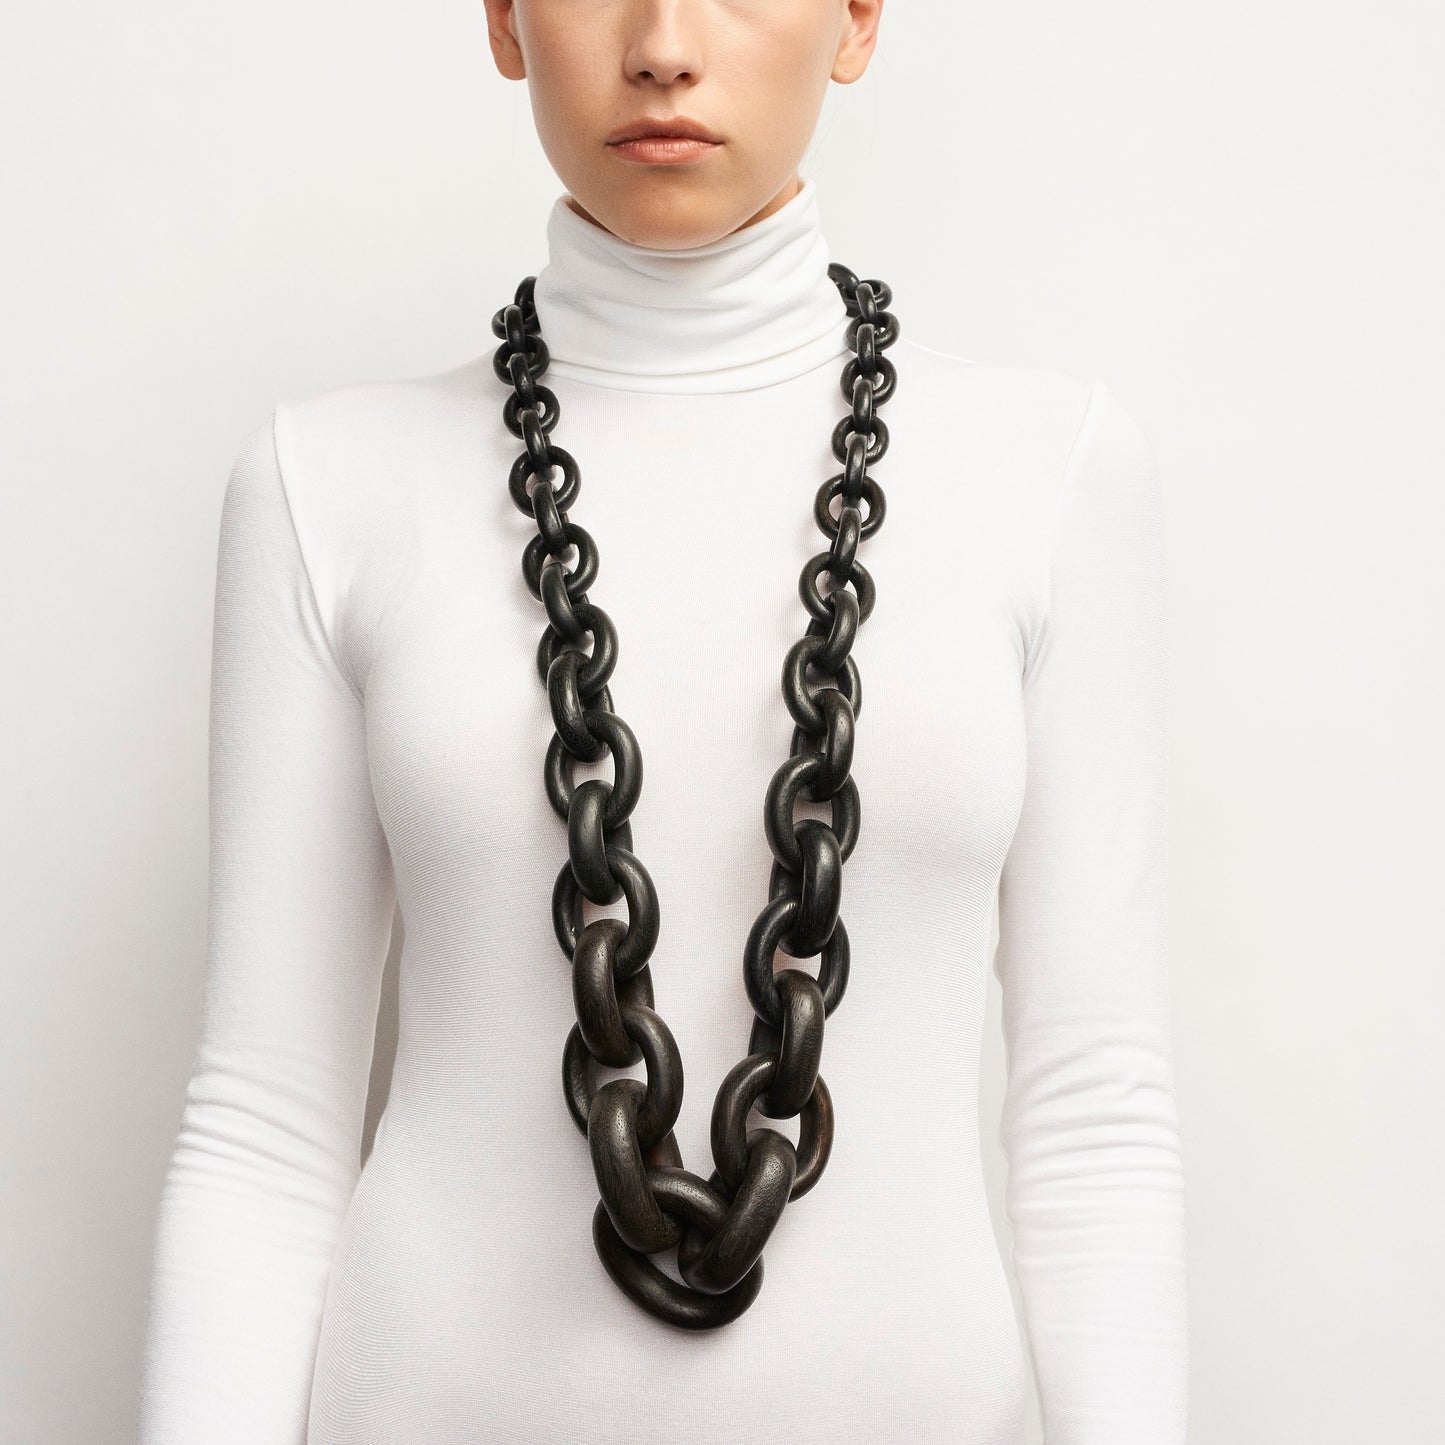 Shanghai necklace black